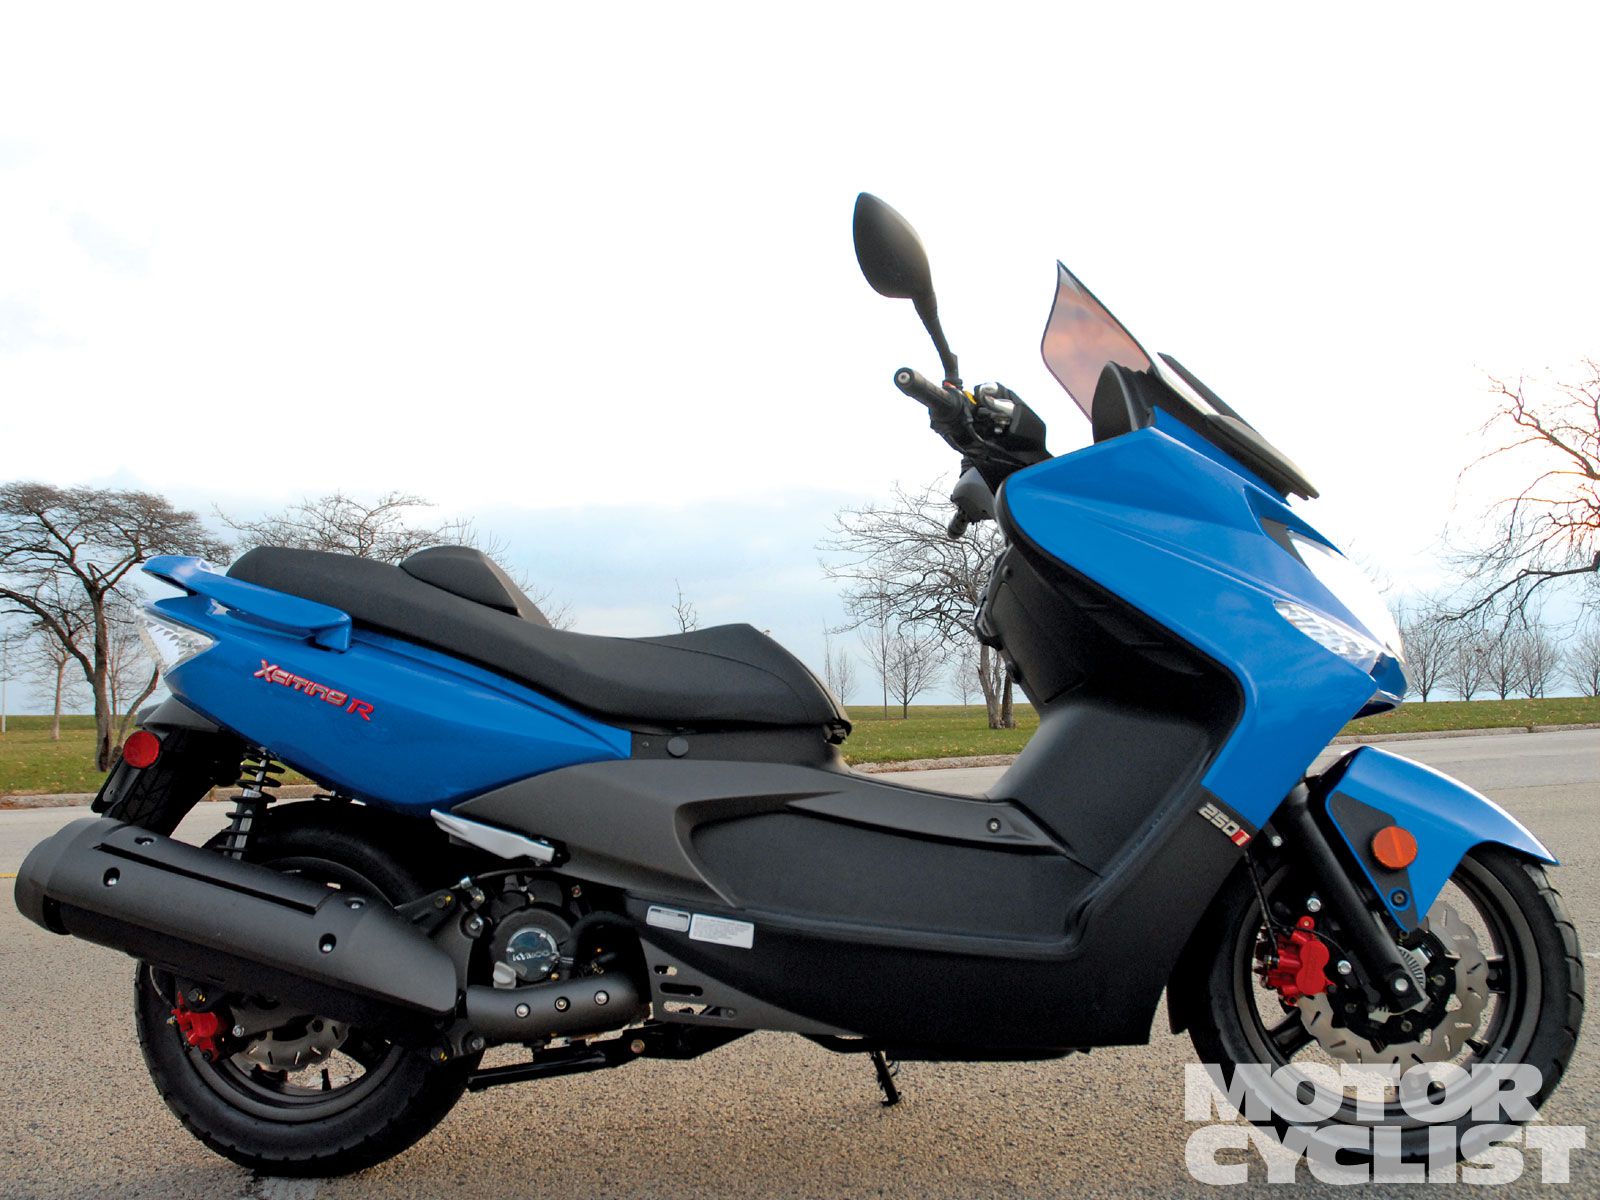 Xciting 250Ri | Motorcyclist